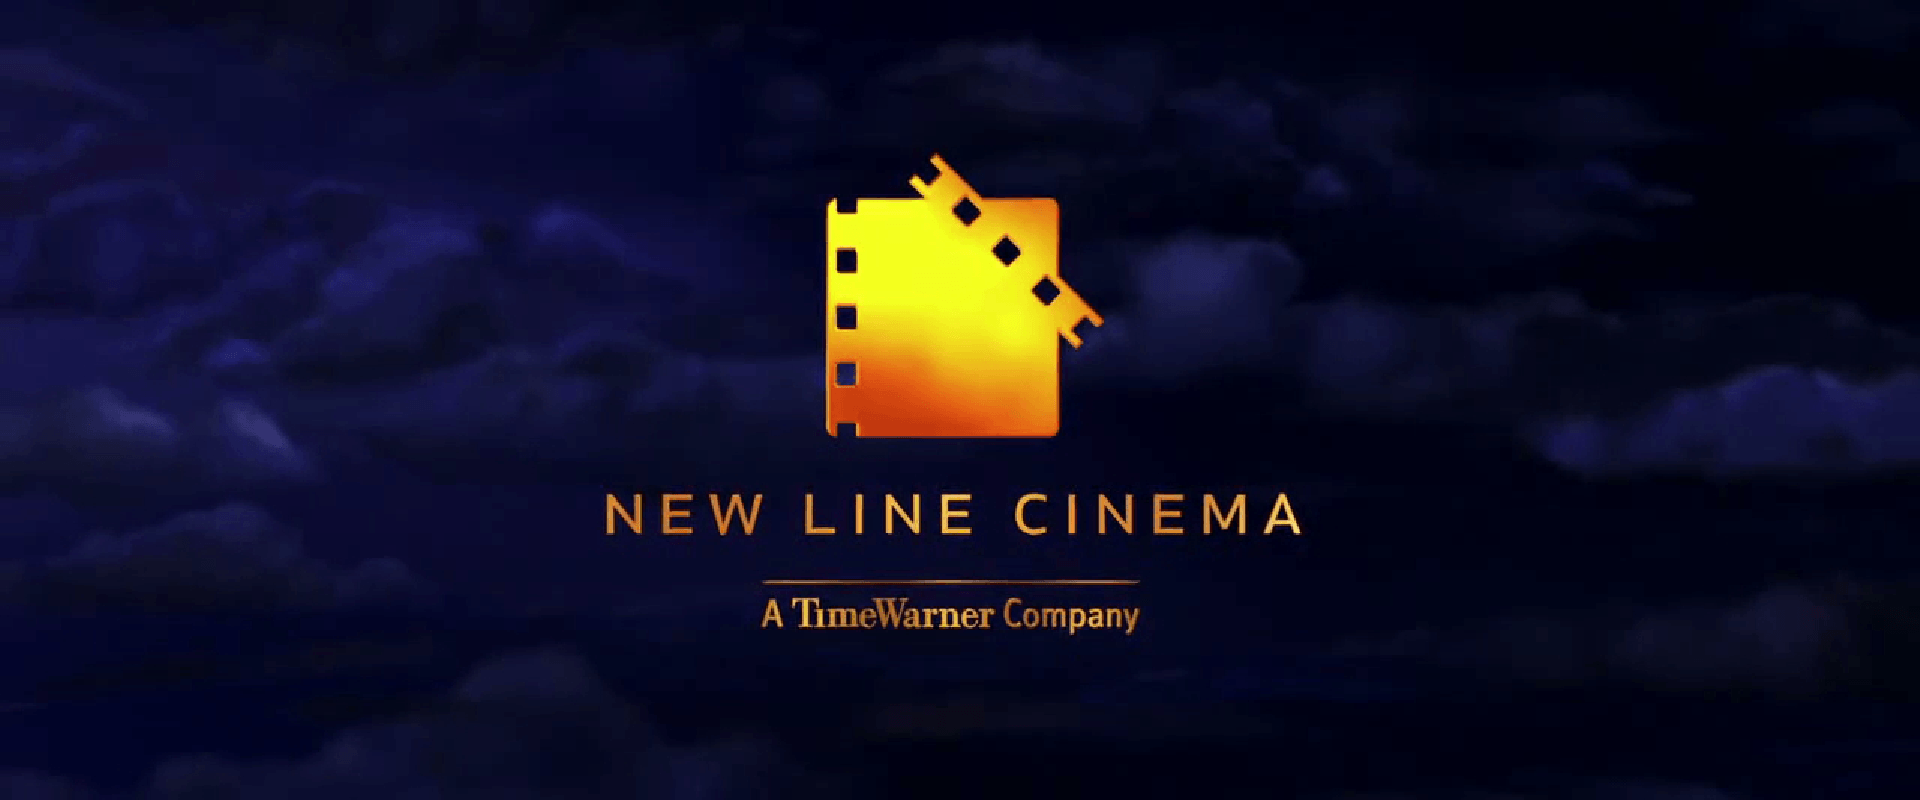 New Line Cinema Logo - New Line Cinema logo.png